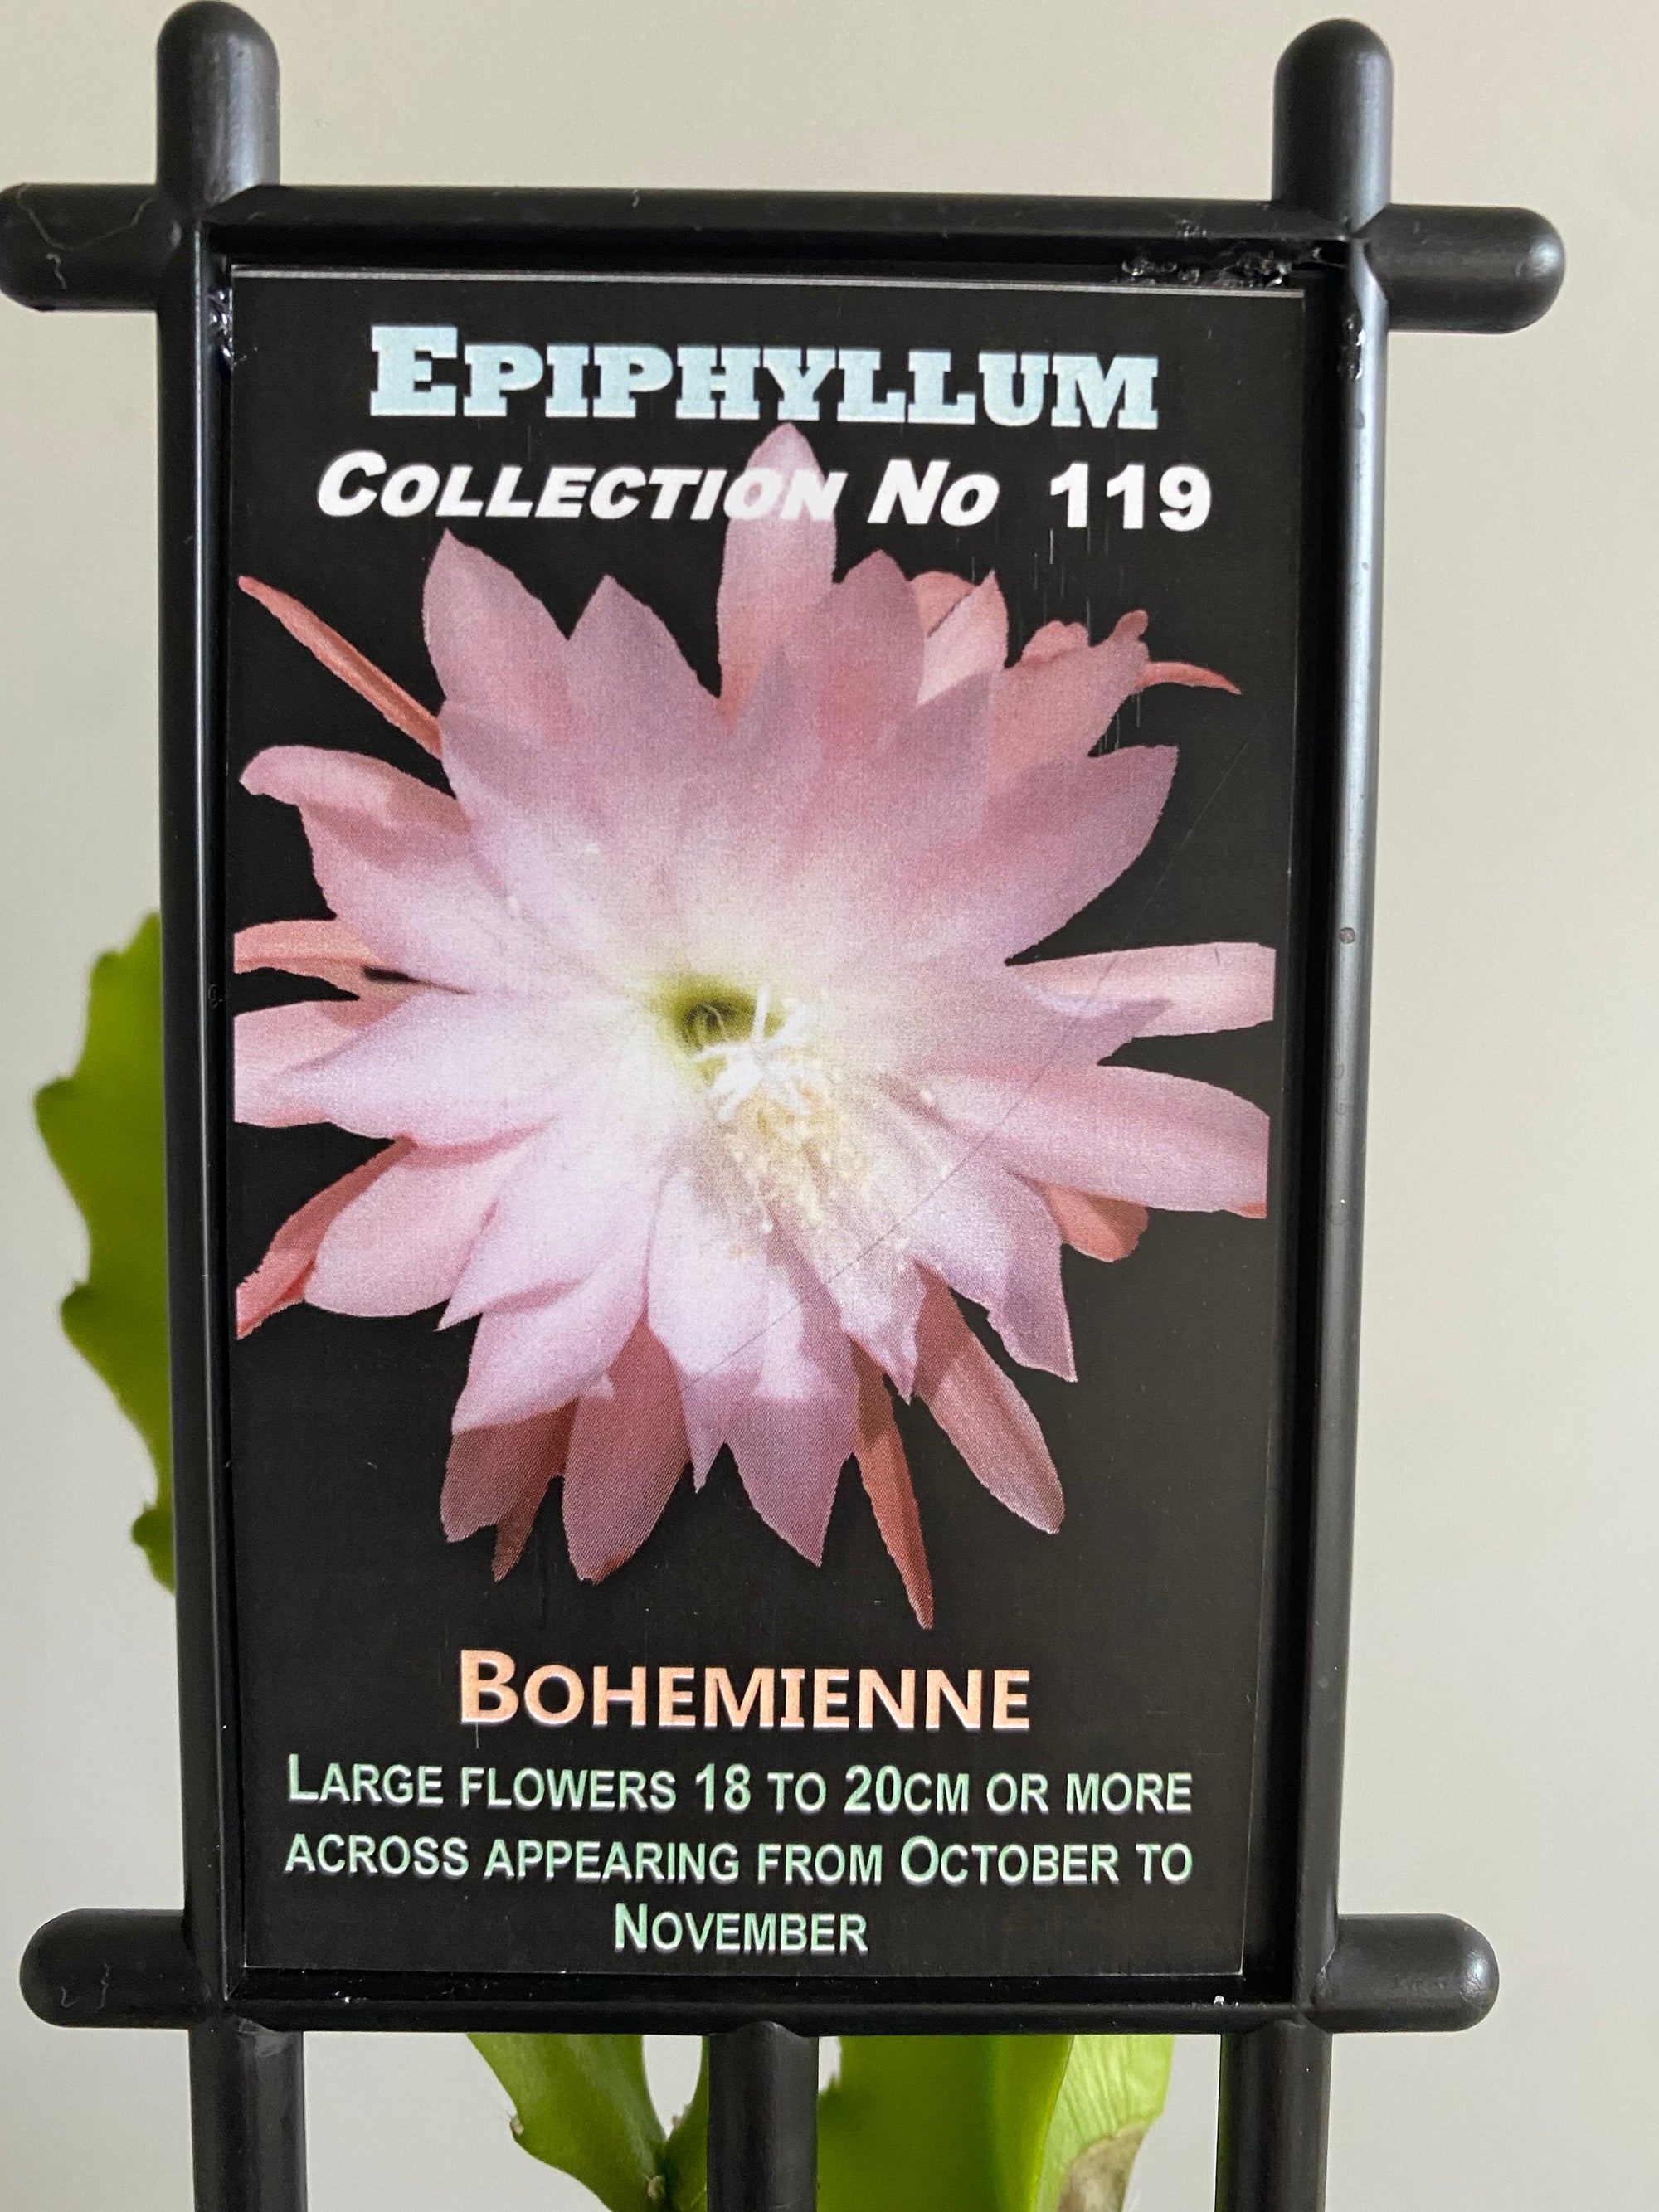 Epiphyllum Bohemienne - Mistletoe Cactus Collection No. 119